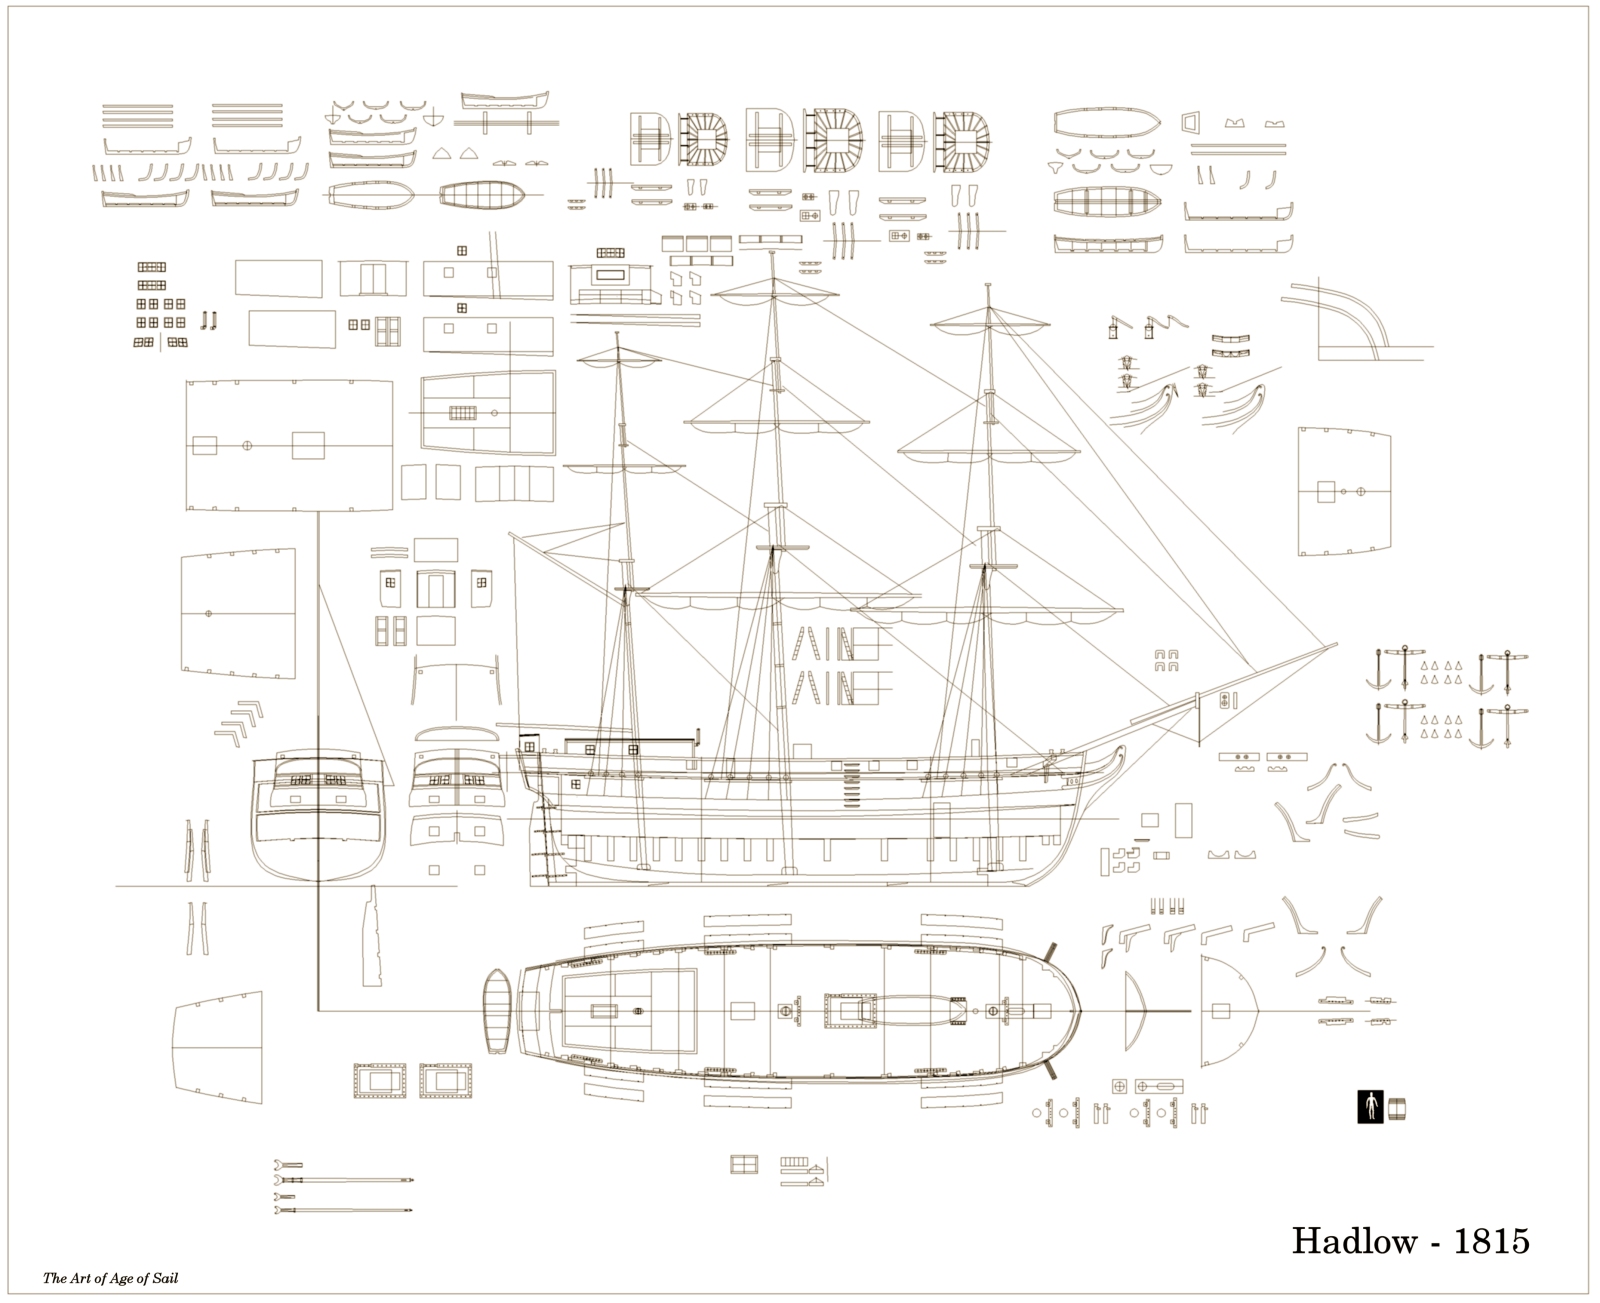 The Art Age of Sail - History: Convict Hadlow circa 1815